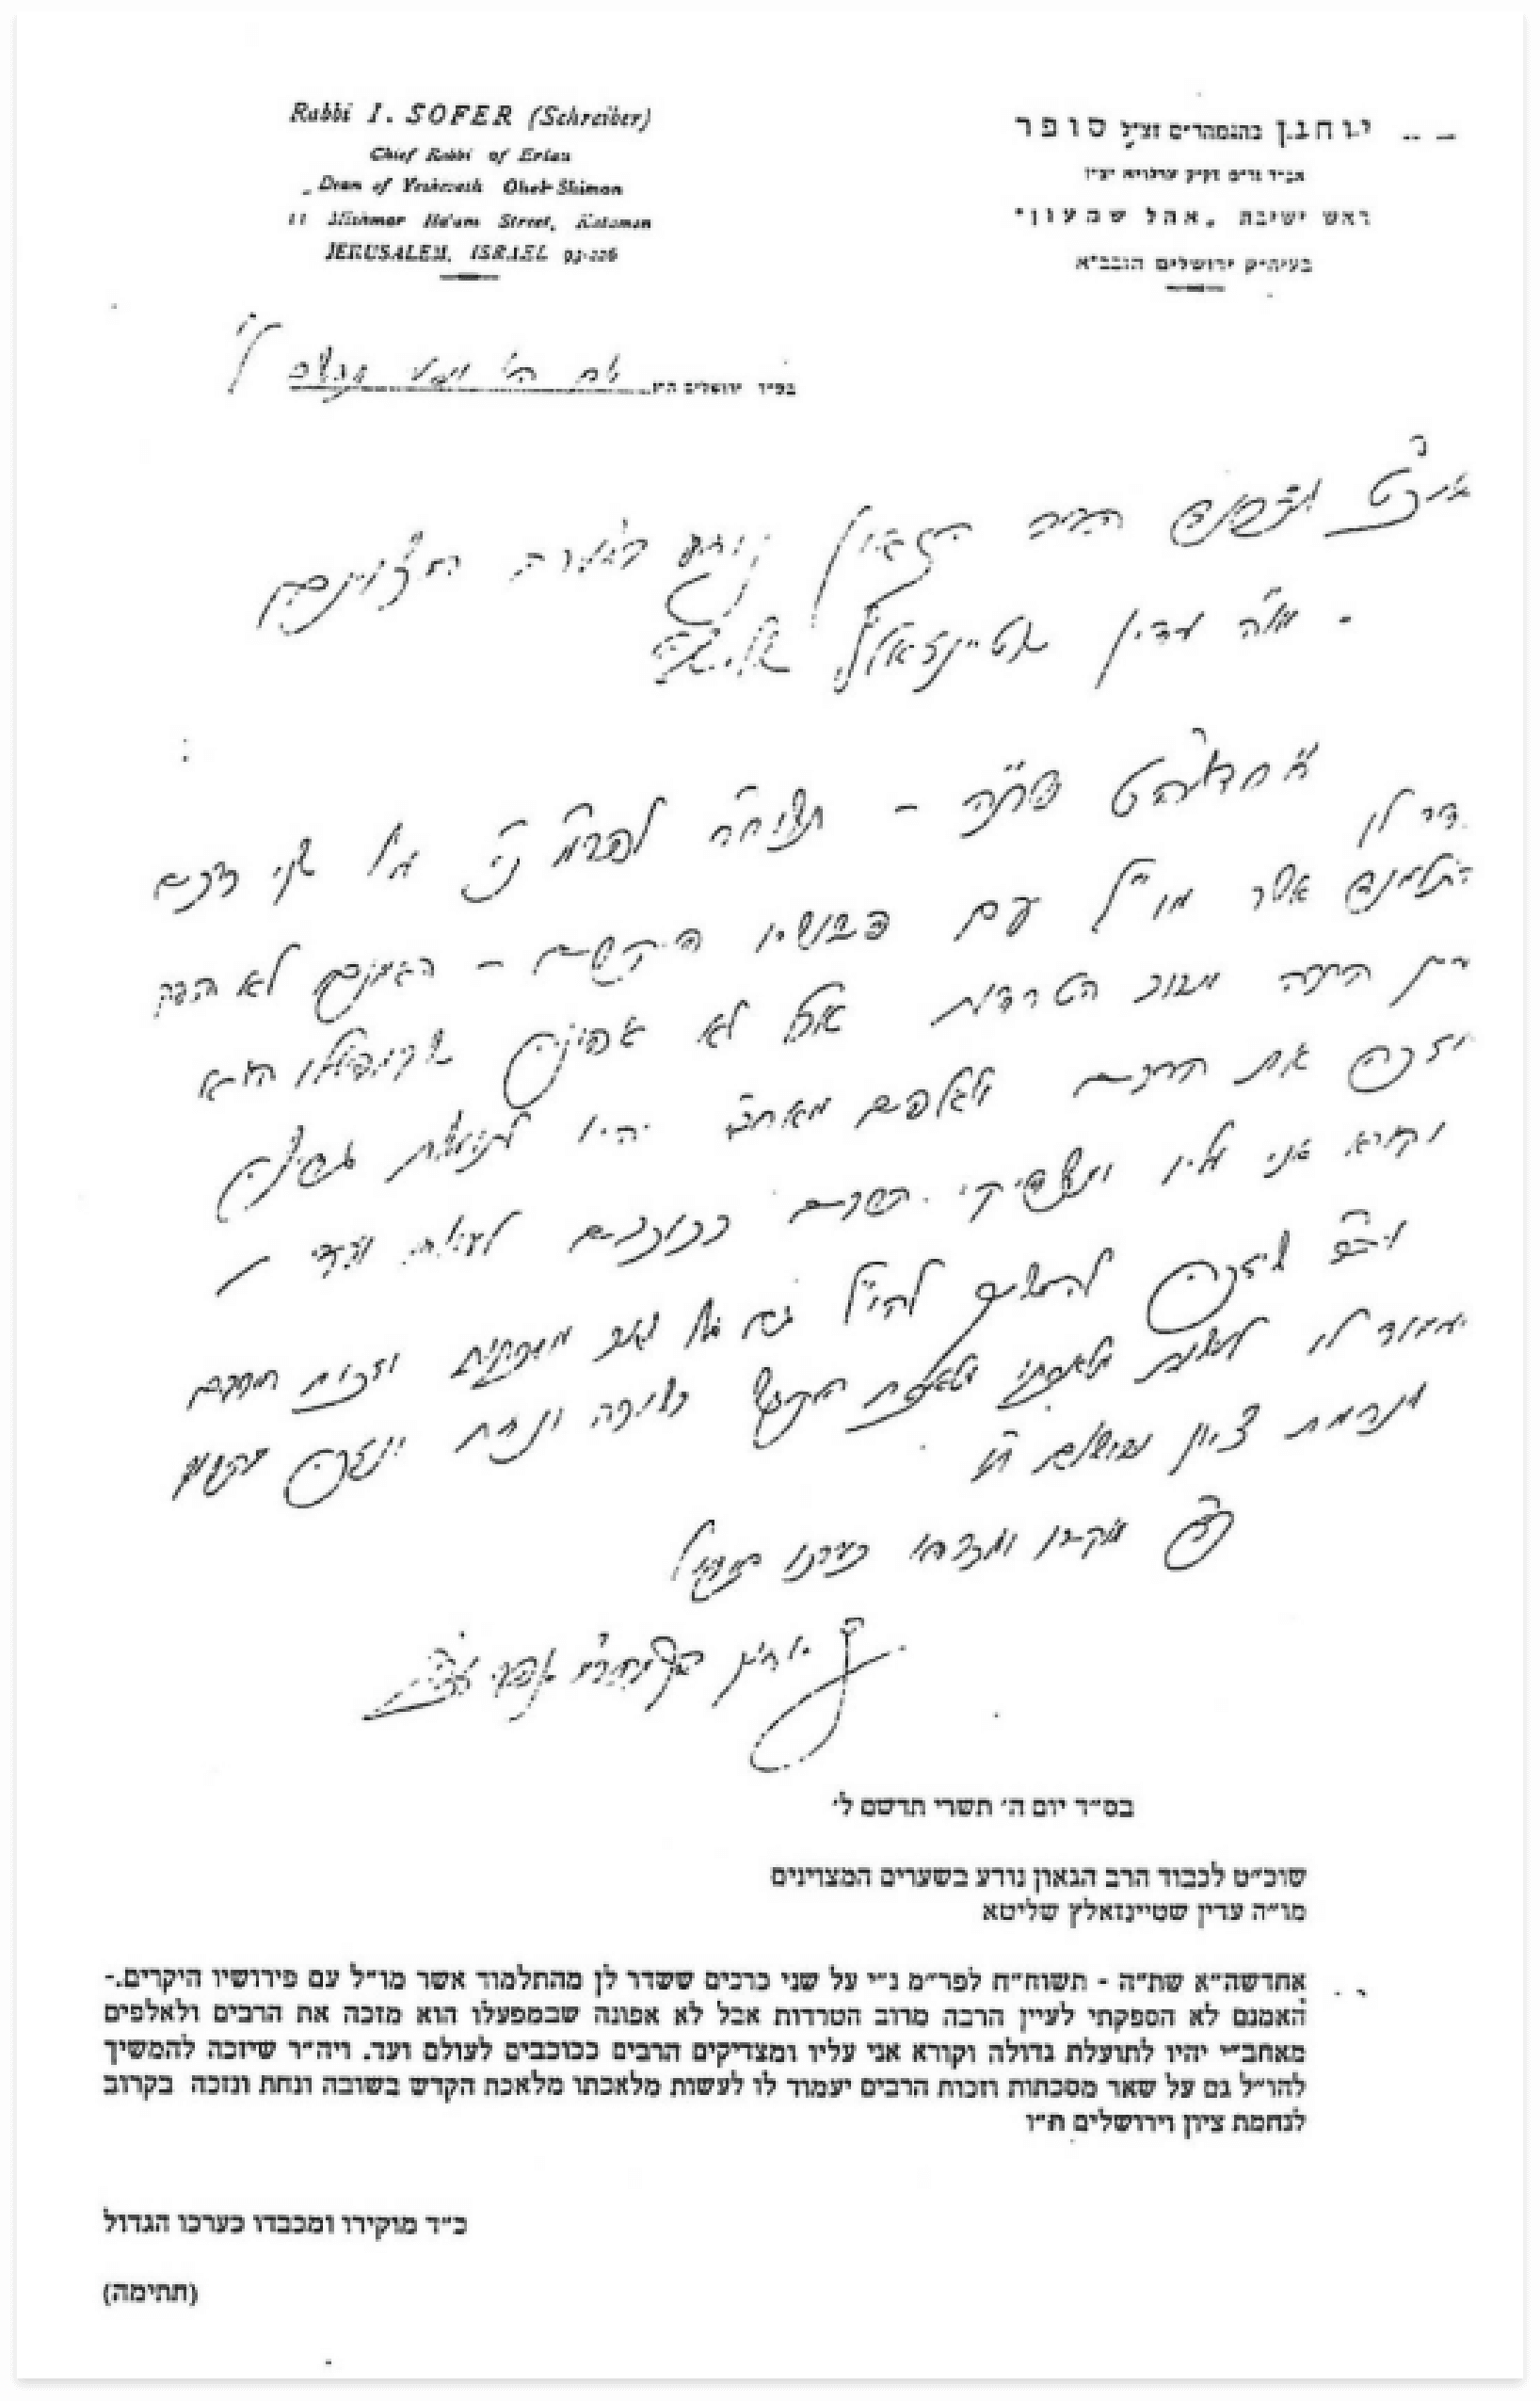 Rabbi Neria Letter